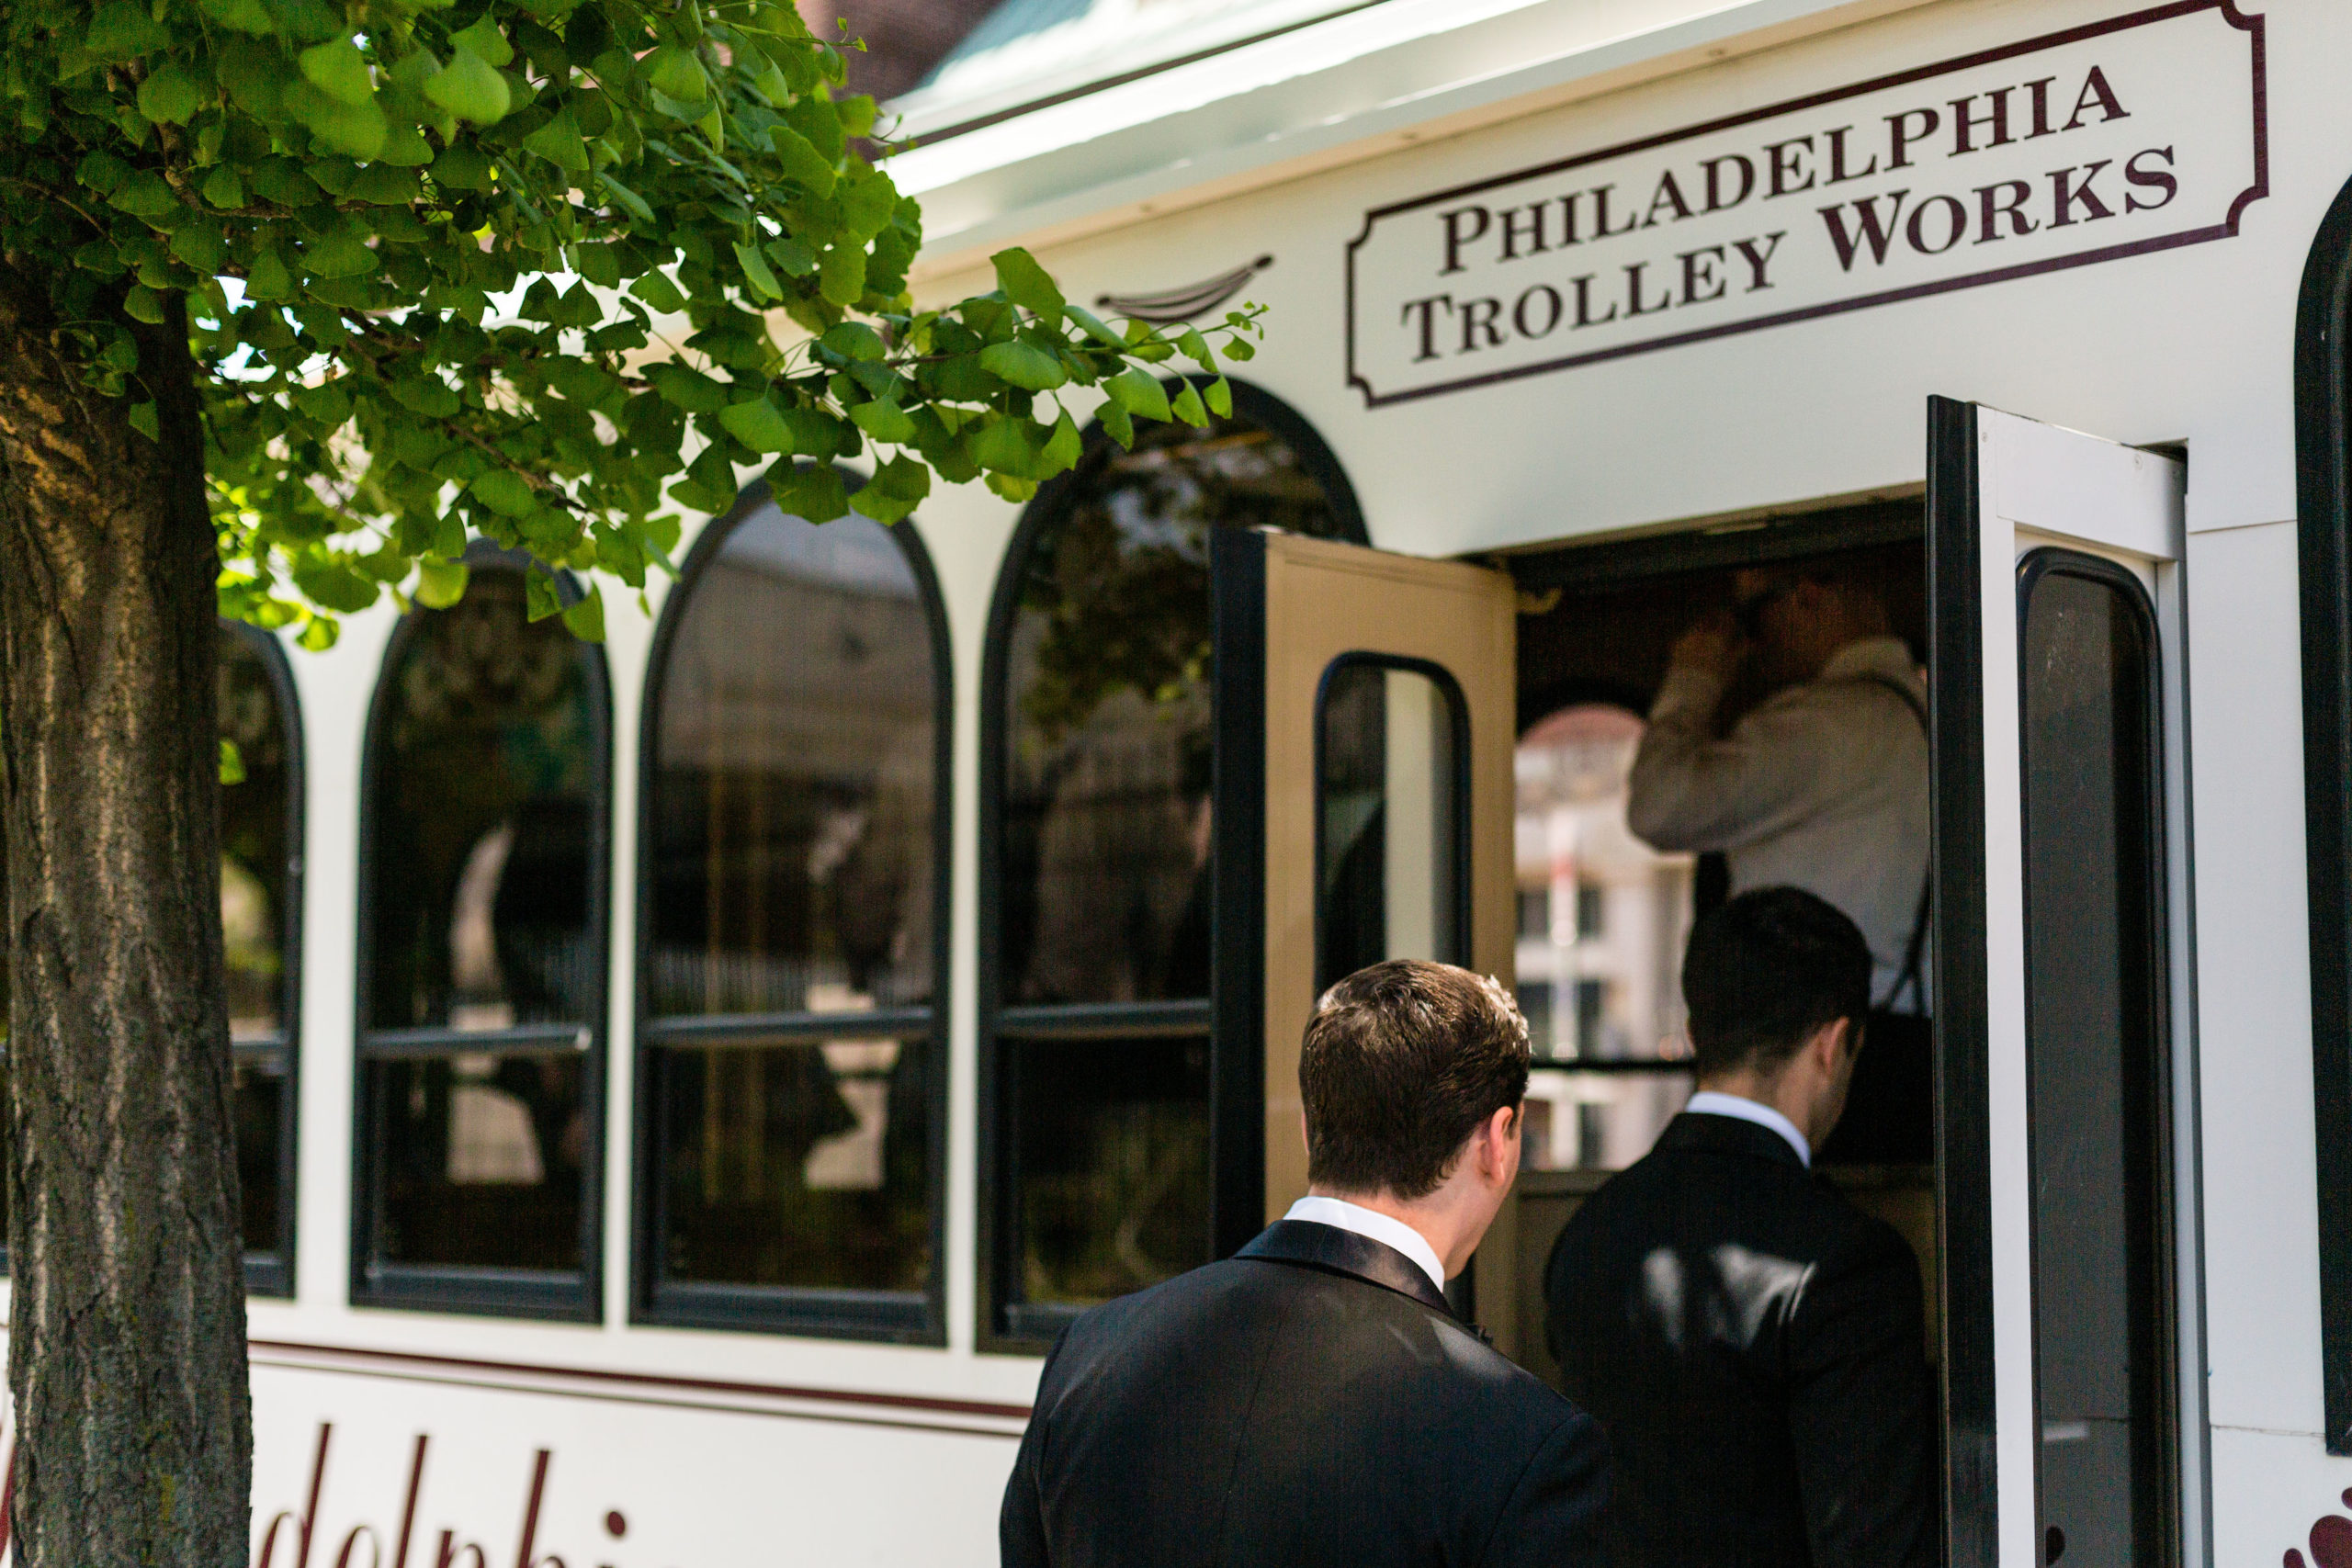 Philadelphia trolley works at wedding